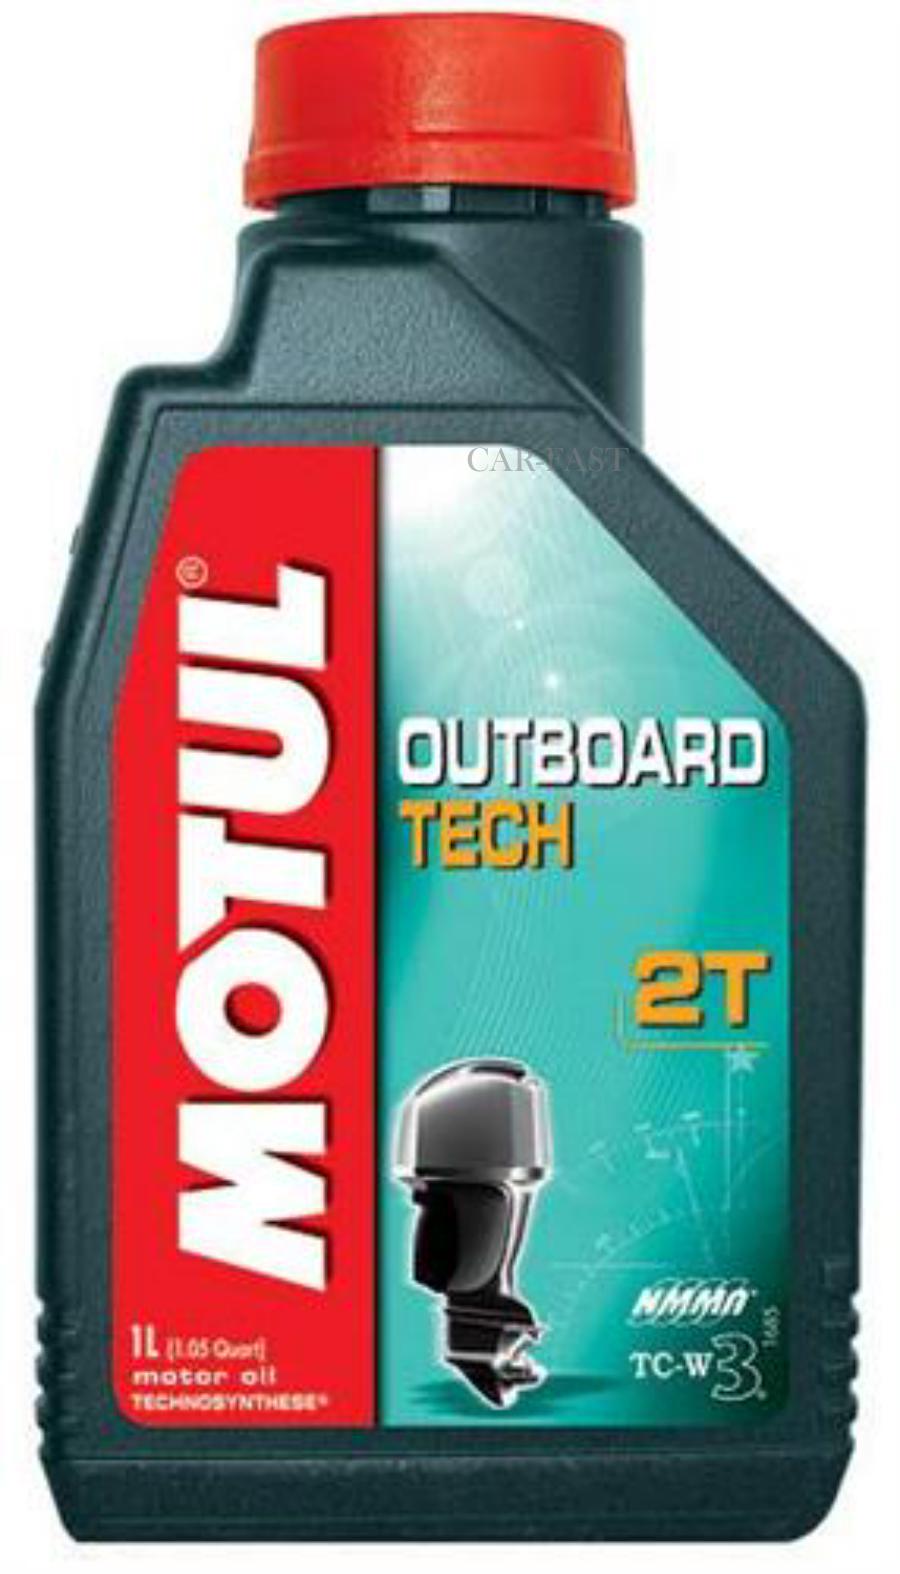 Motul outboard Tech 2t 1 л. Масло Motul outboard Tech 2t. Motul outboard 2t 1л. Масло 2-х тактное Motul outboard 2t. Мотюль масло для 2т моторов